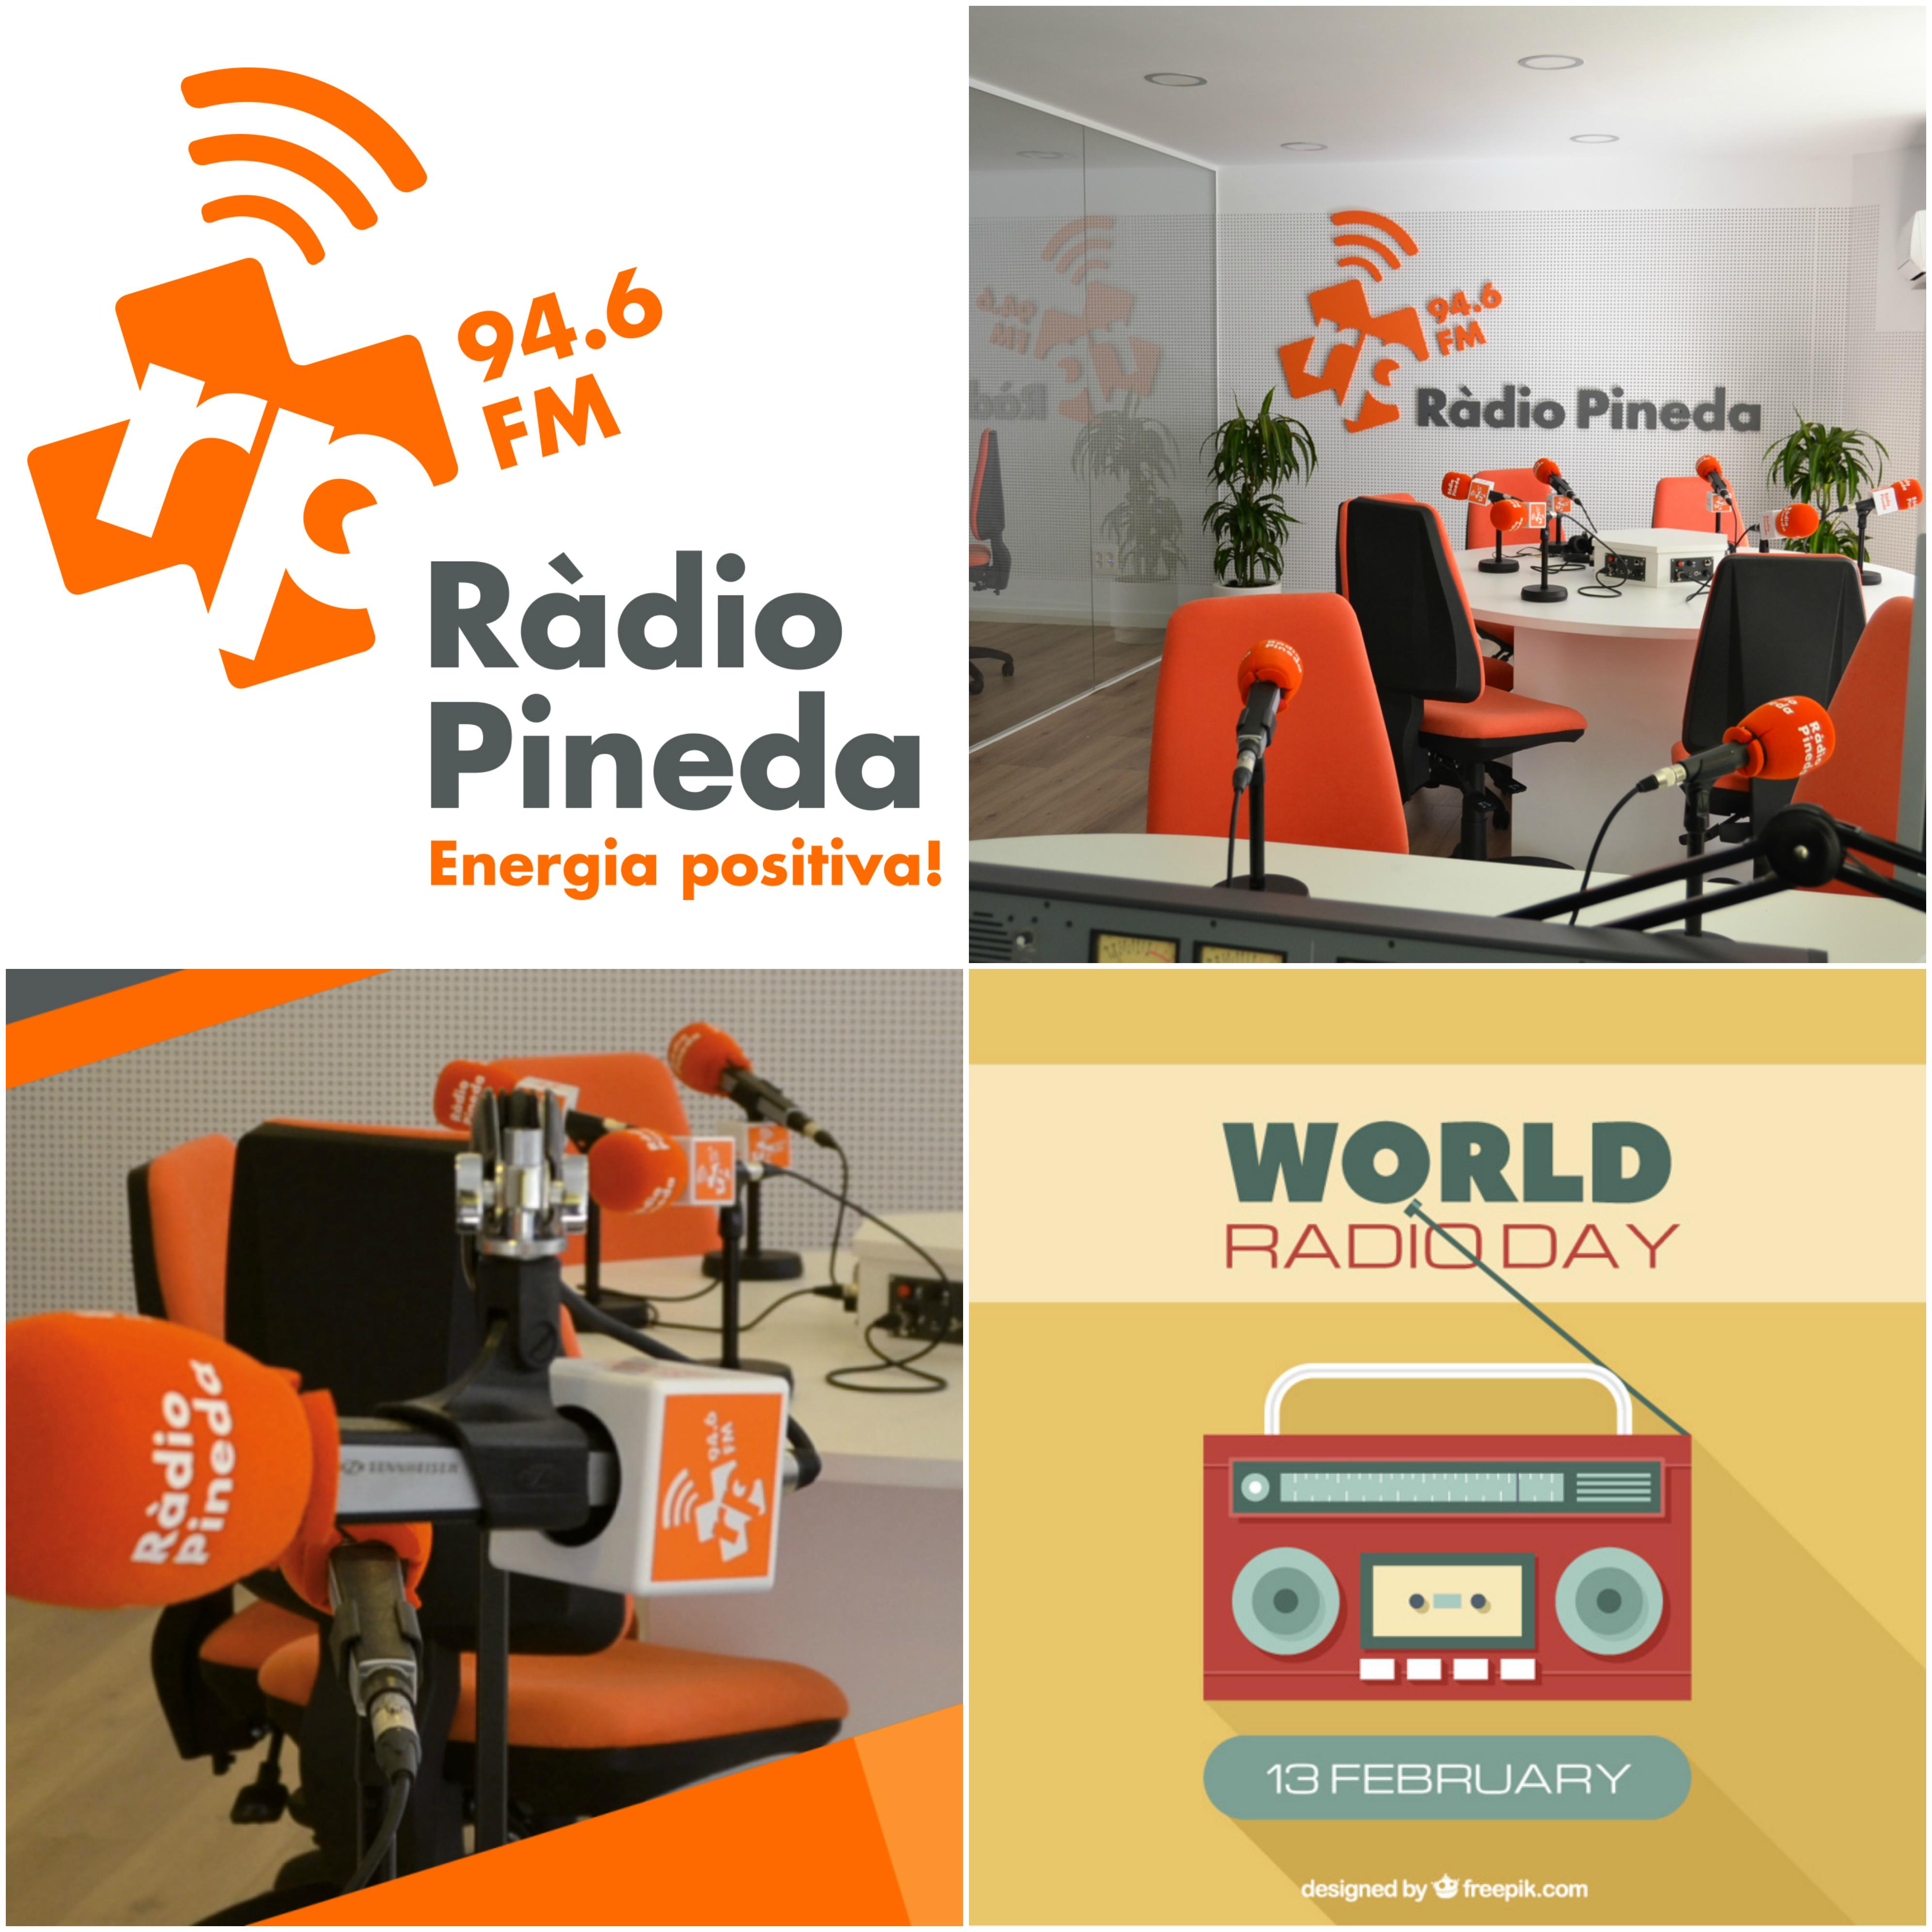 Ràdio Pineda 94.6 FM